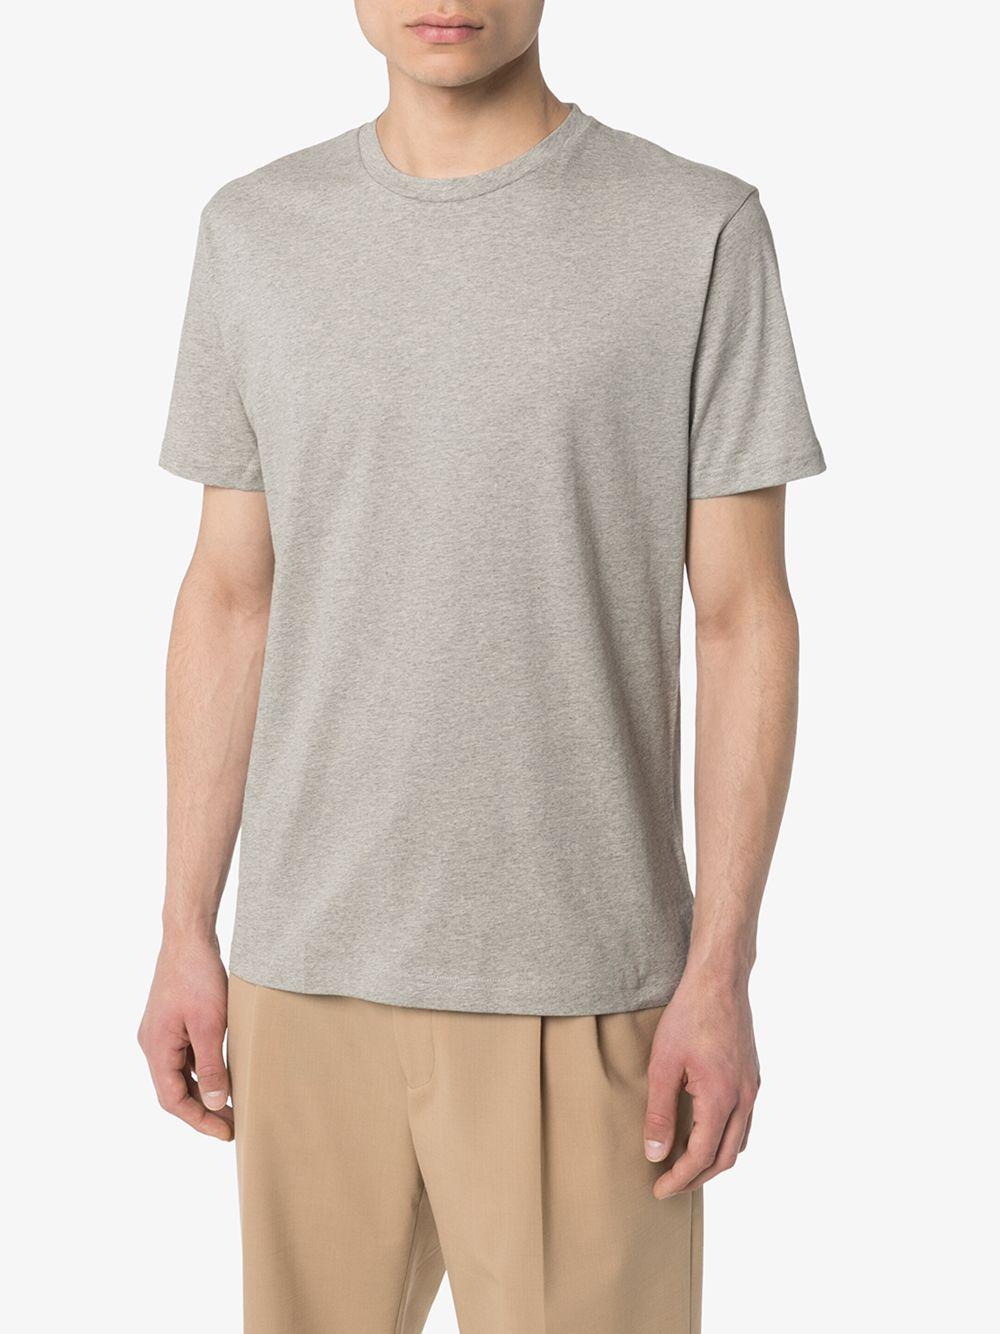 Sunspel Riviera Cotton T-shirt in Grey (Gray) for Men - Lyst